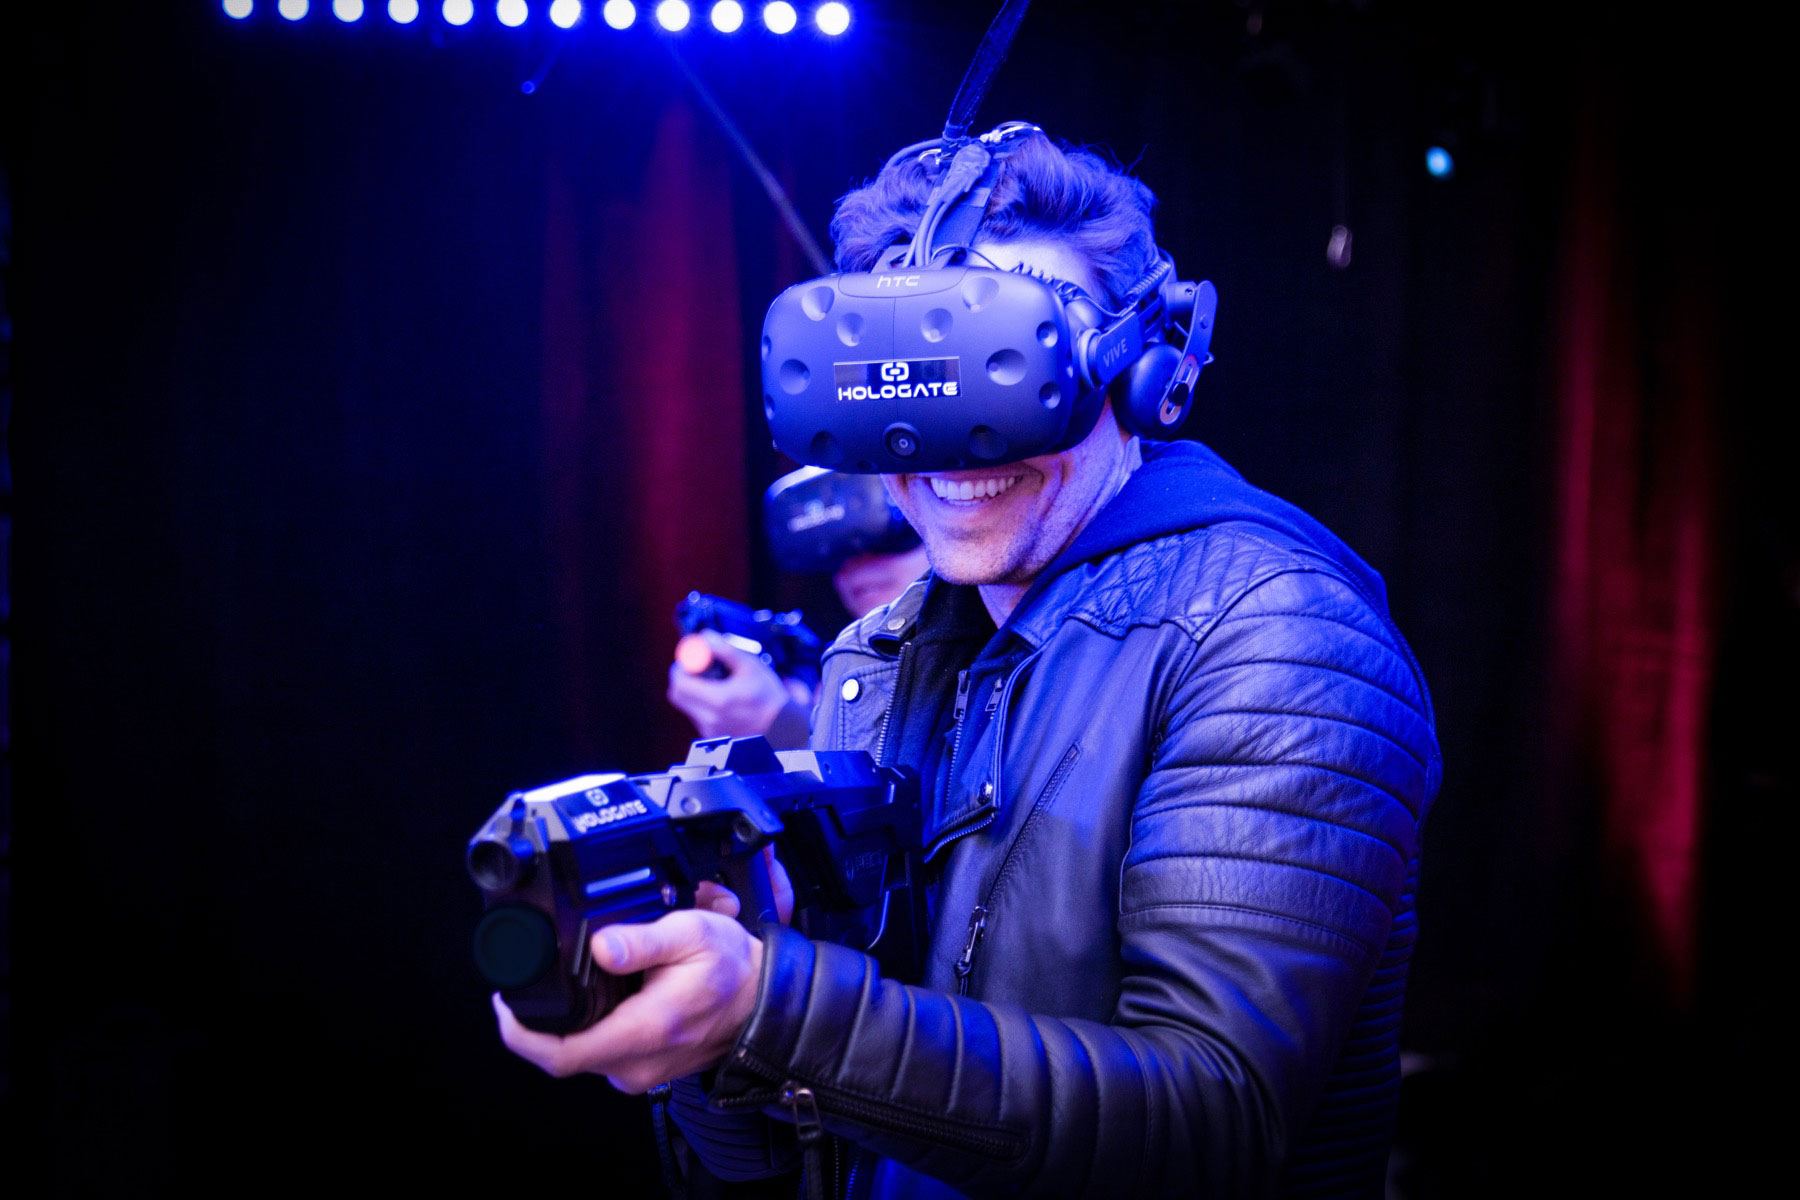 virtual-reality-stuttgart